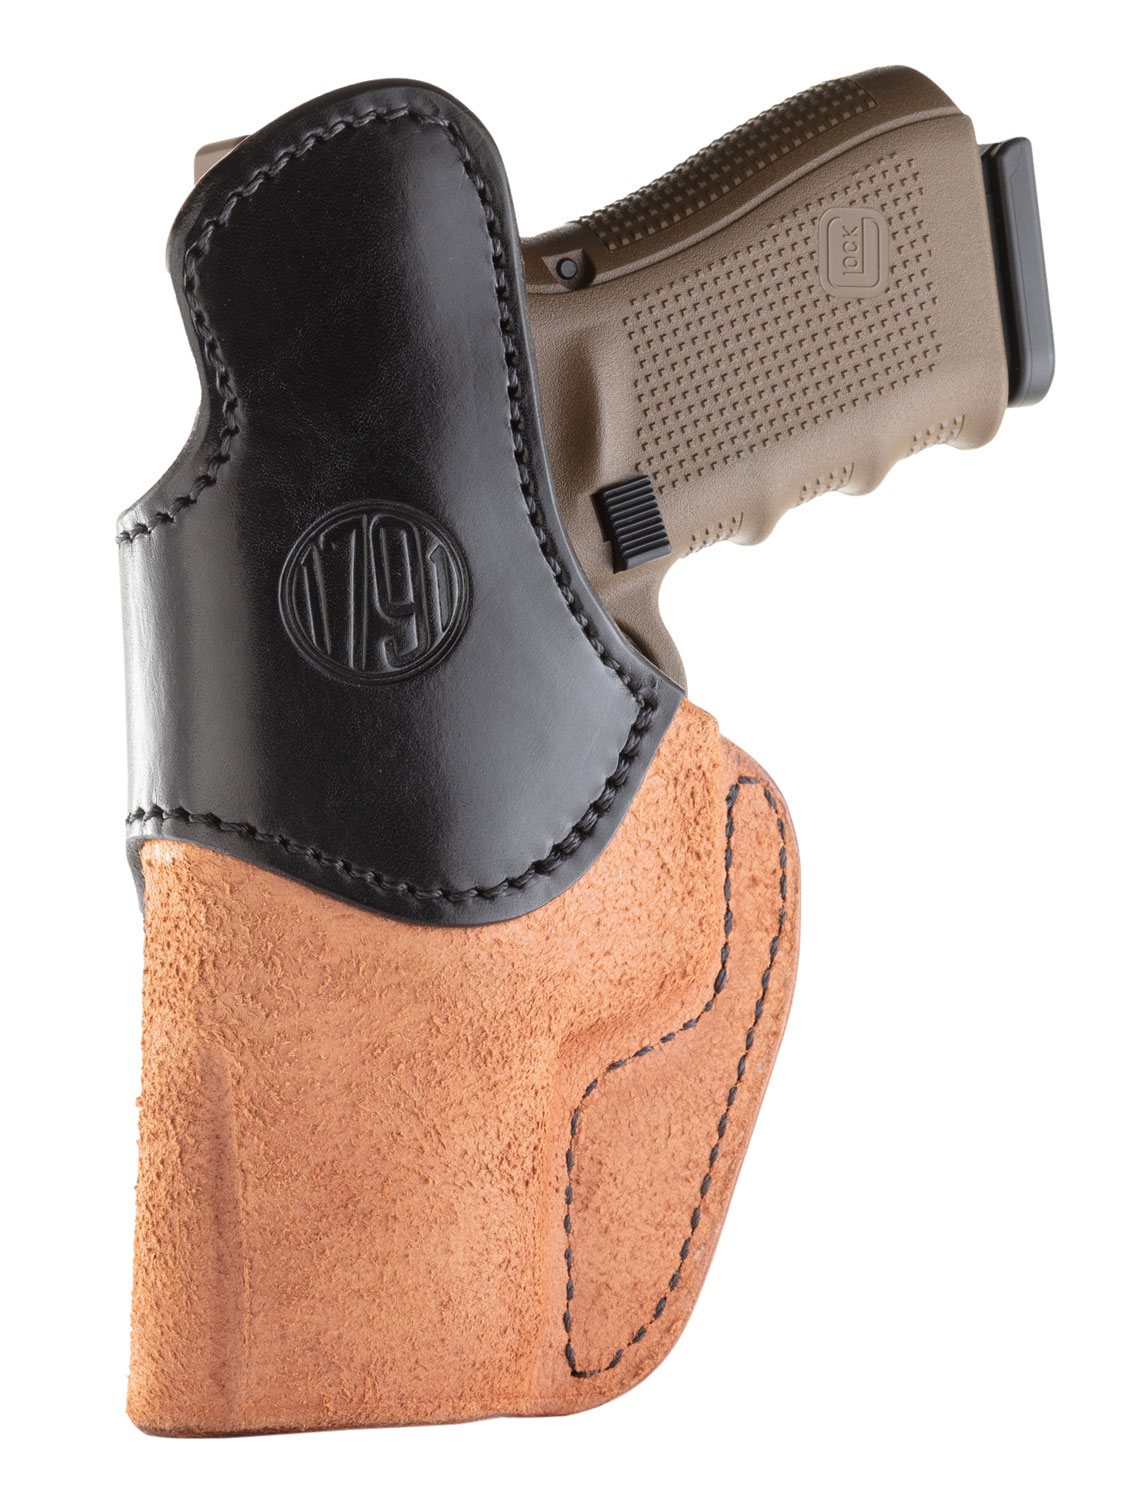 1791 Gunleather RCH4BLBR RCH  IWB Size 04 Black/Brown Leather Belt Clip Compatible w/Glock 17/S&W M&P Shield/Springfield XD Right Hand